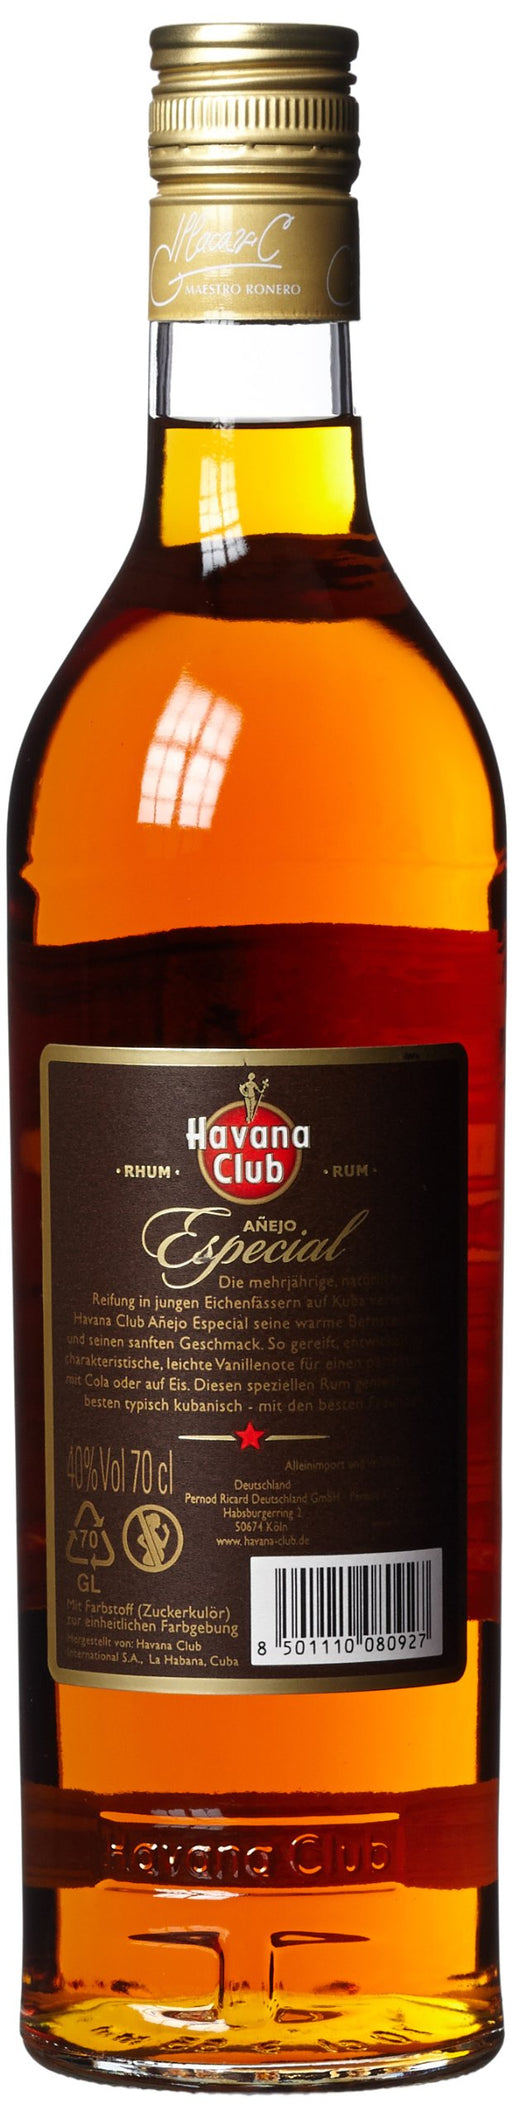 Havana Club Anejo Especial 7 Anos Rum, 700 ml  Havana Club